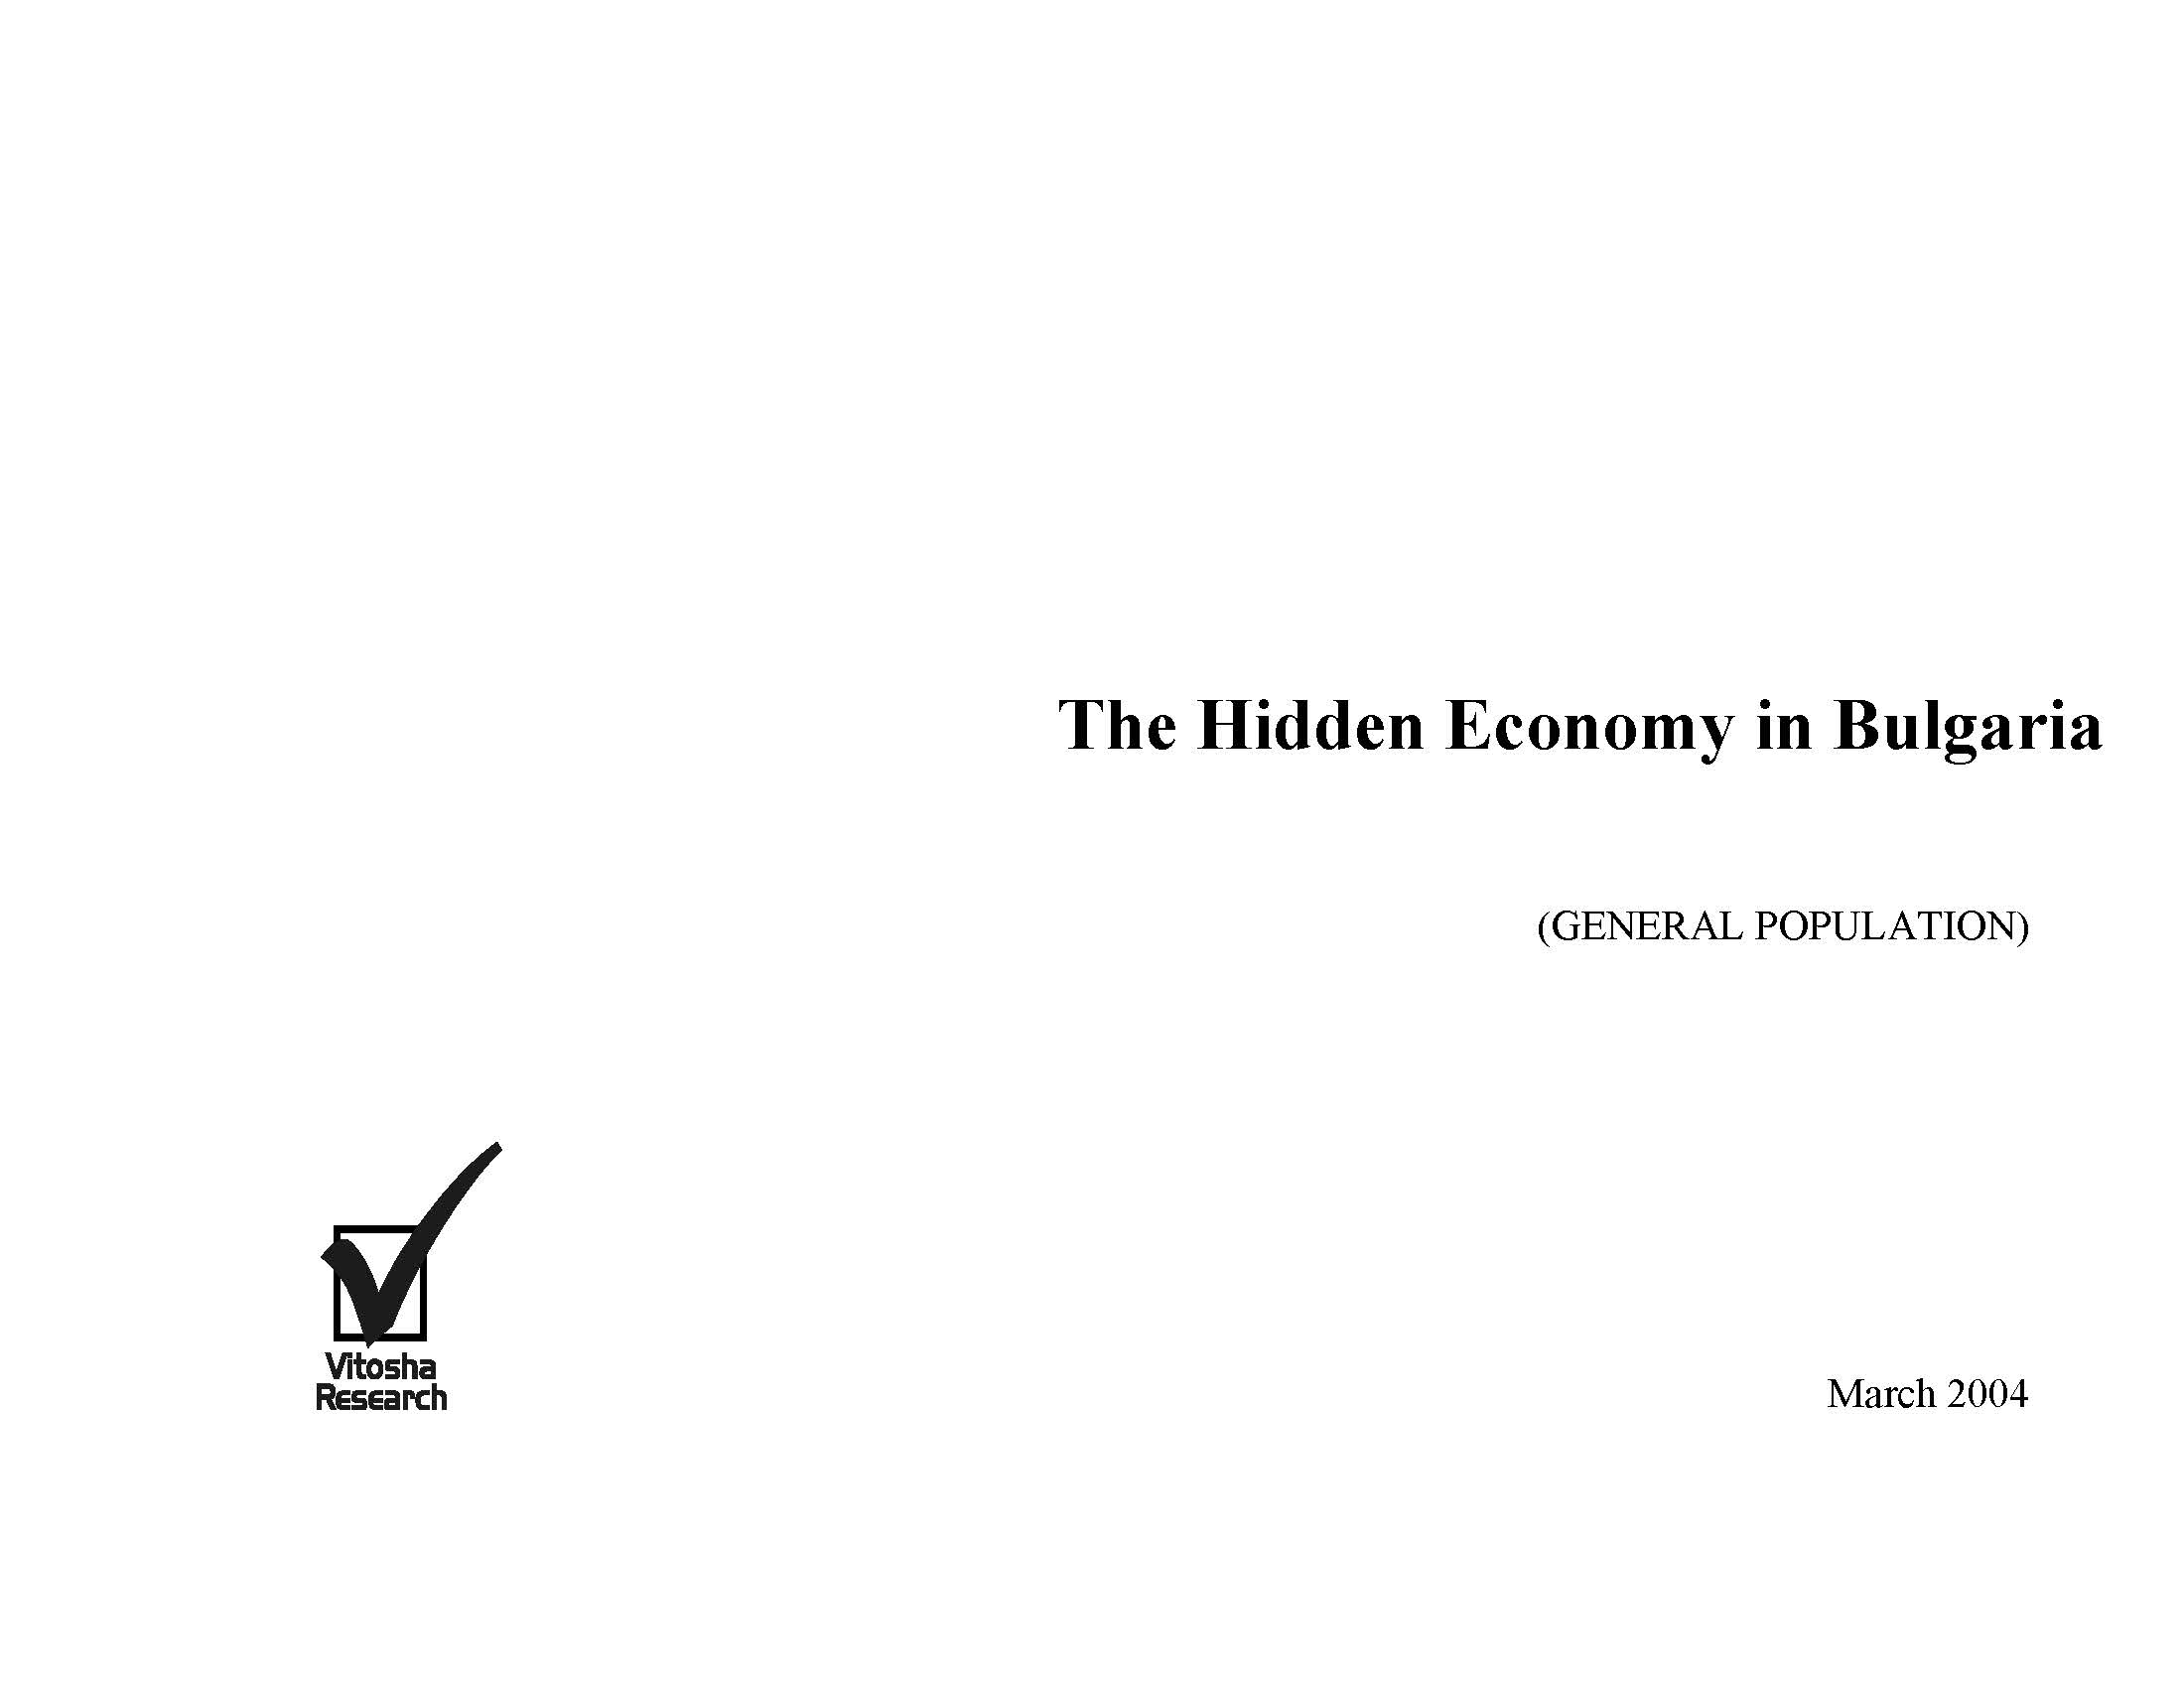 The Hidden Economy in Bulgaria (General Public), March 2004